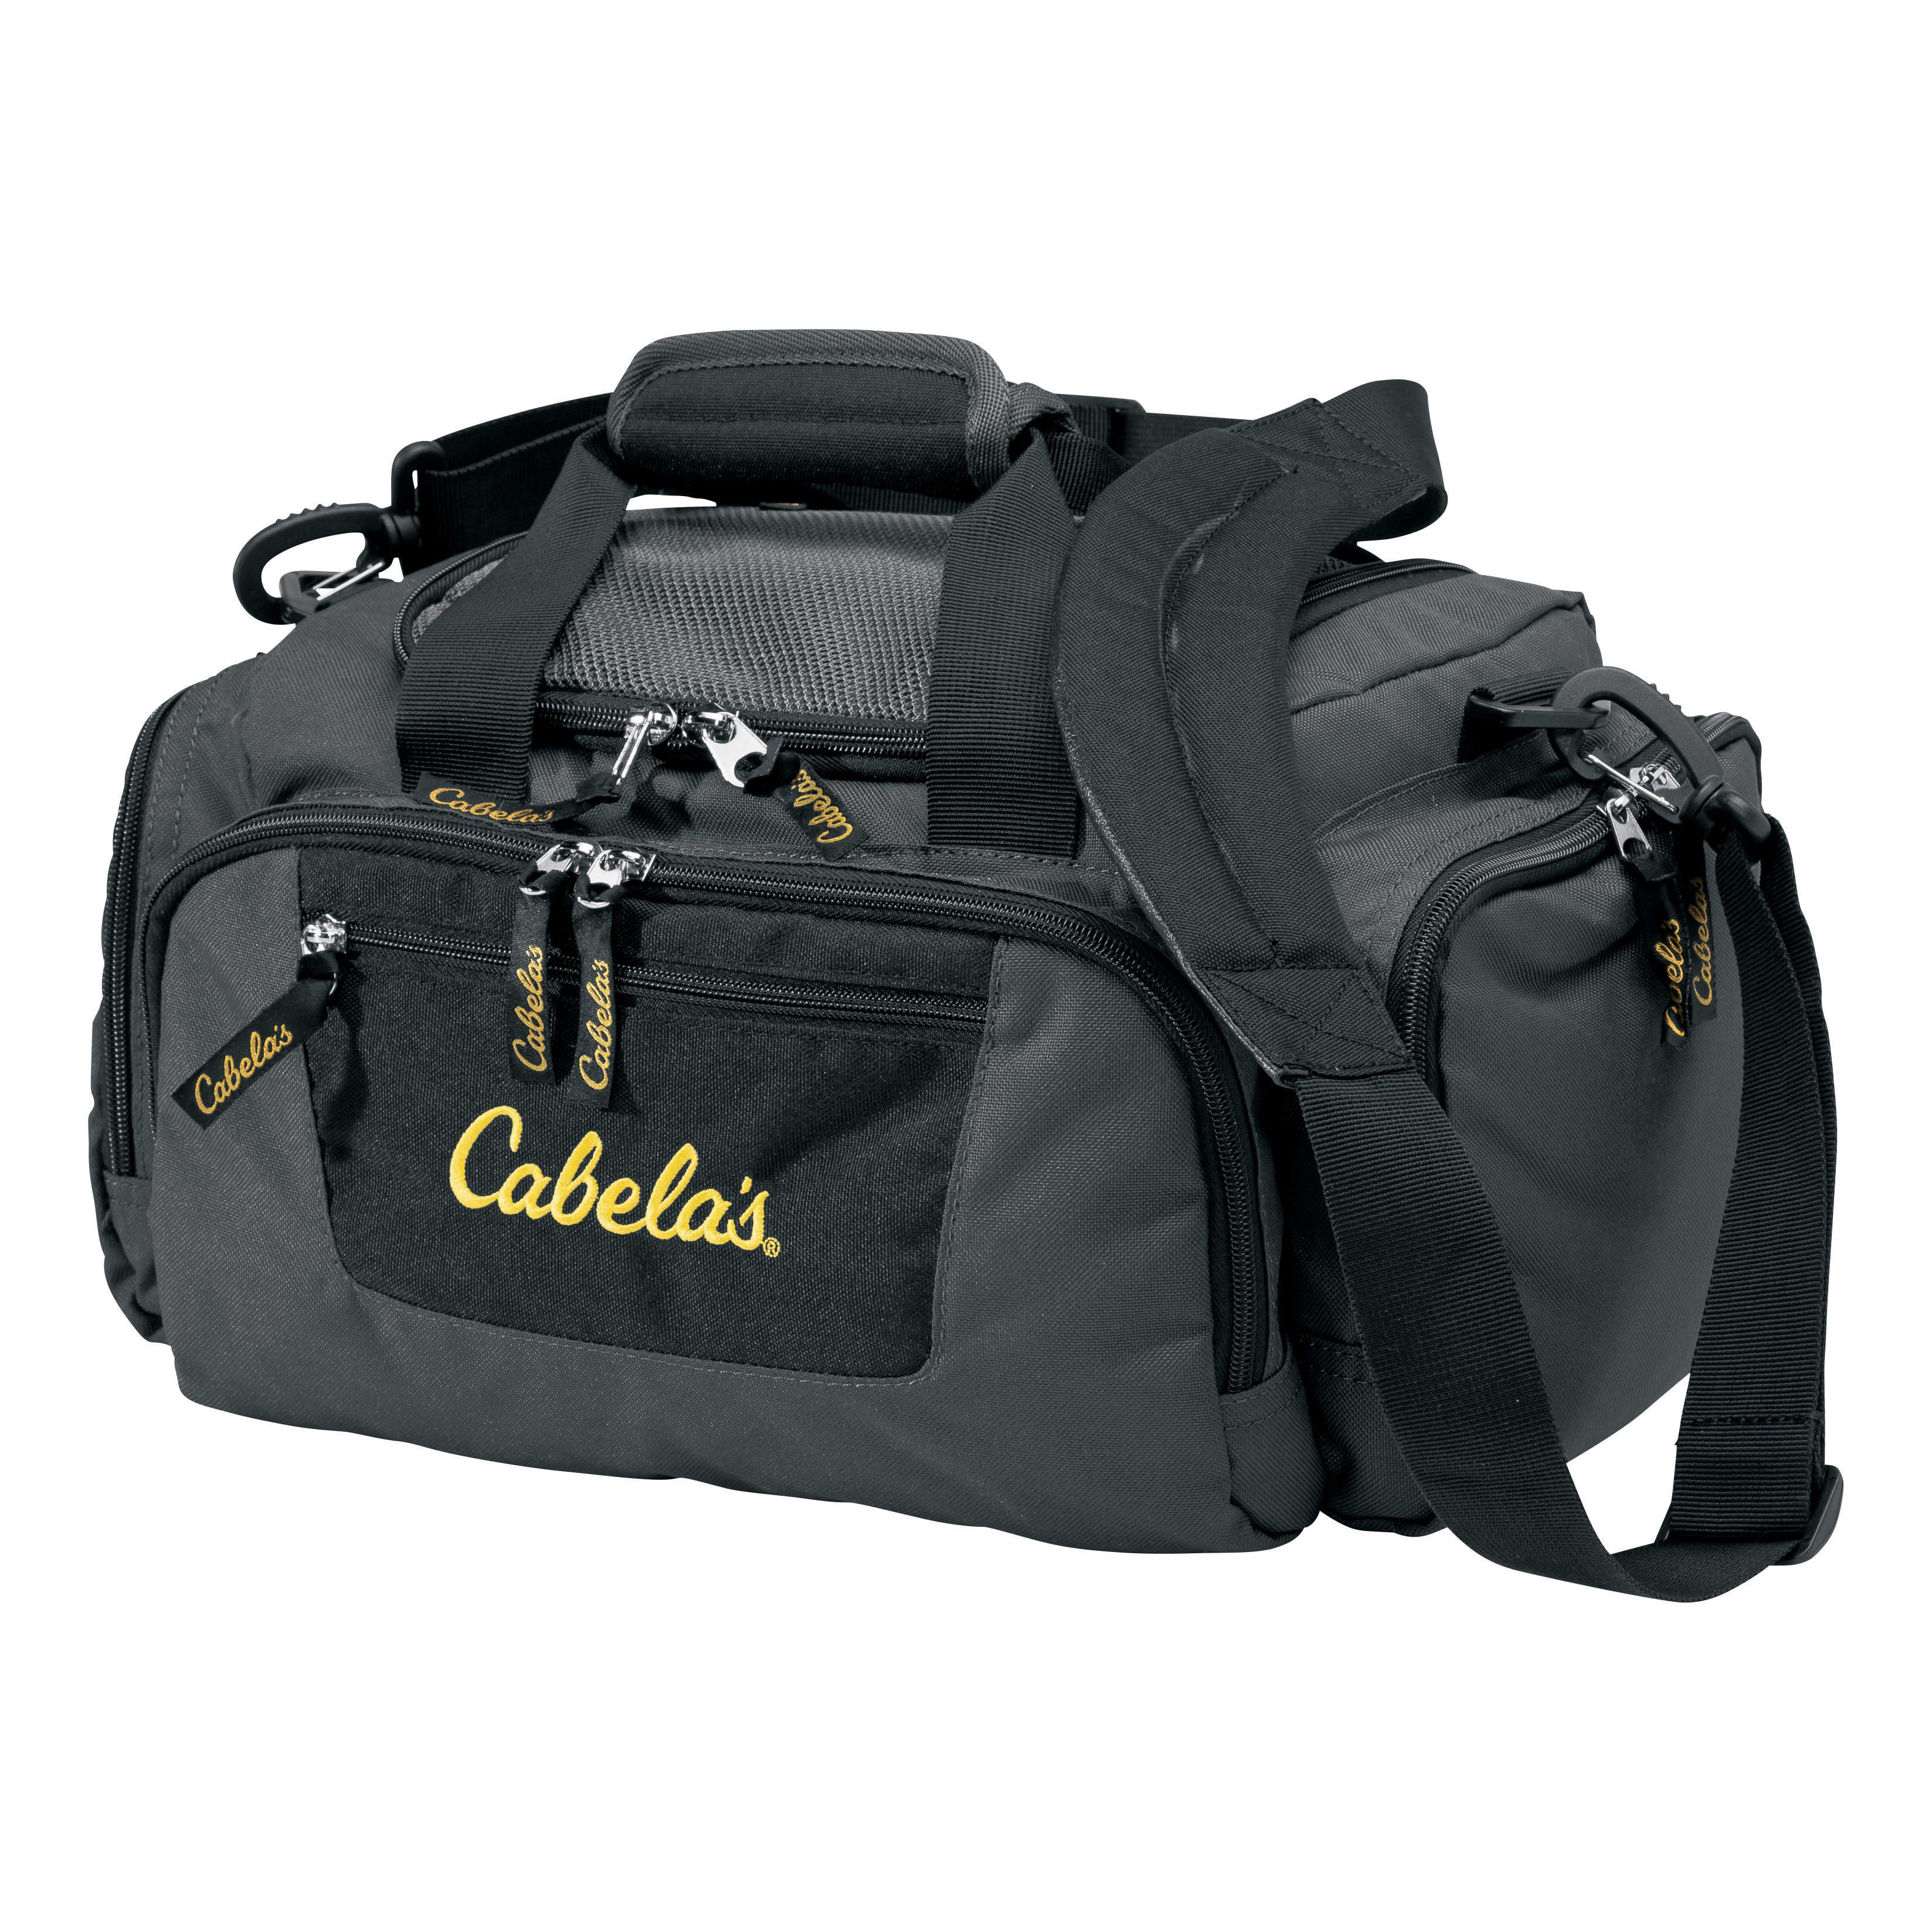 Cabela's Catch-All Gear Bags - Grey